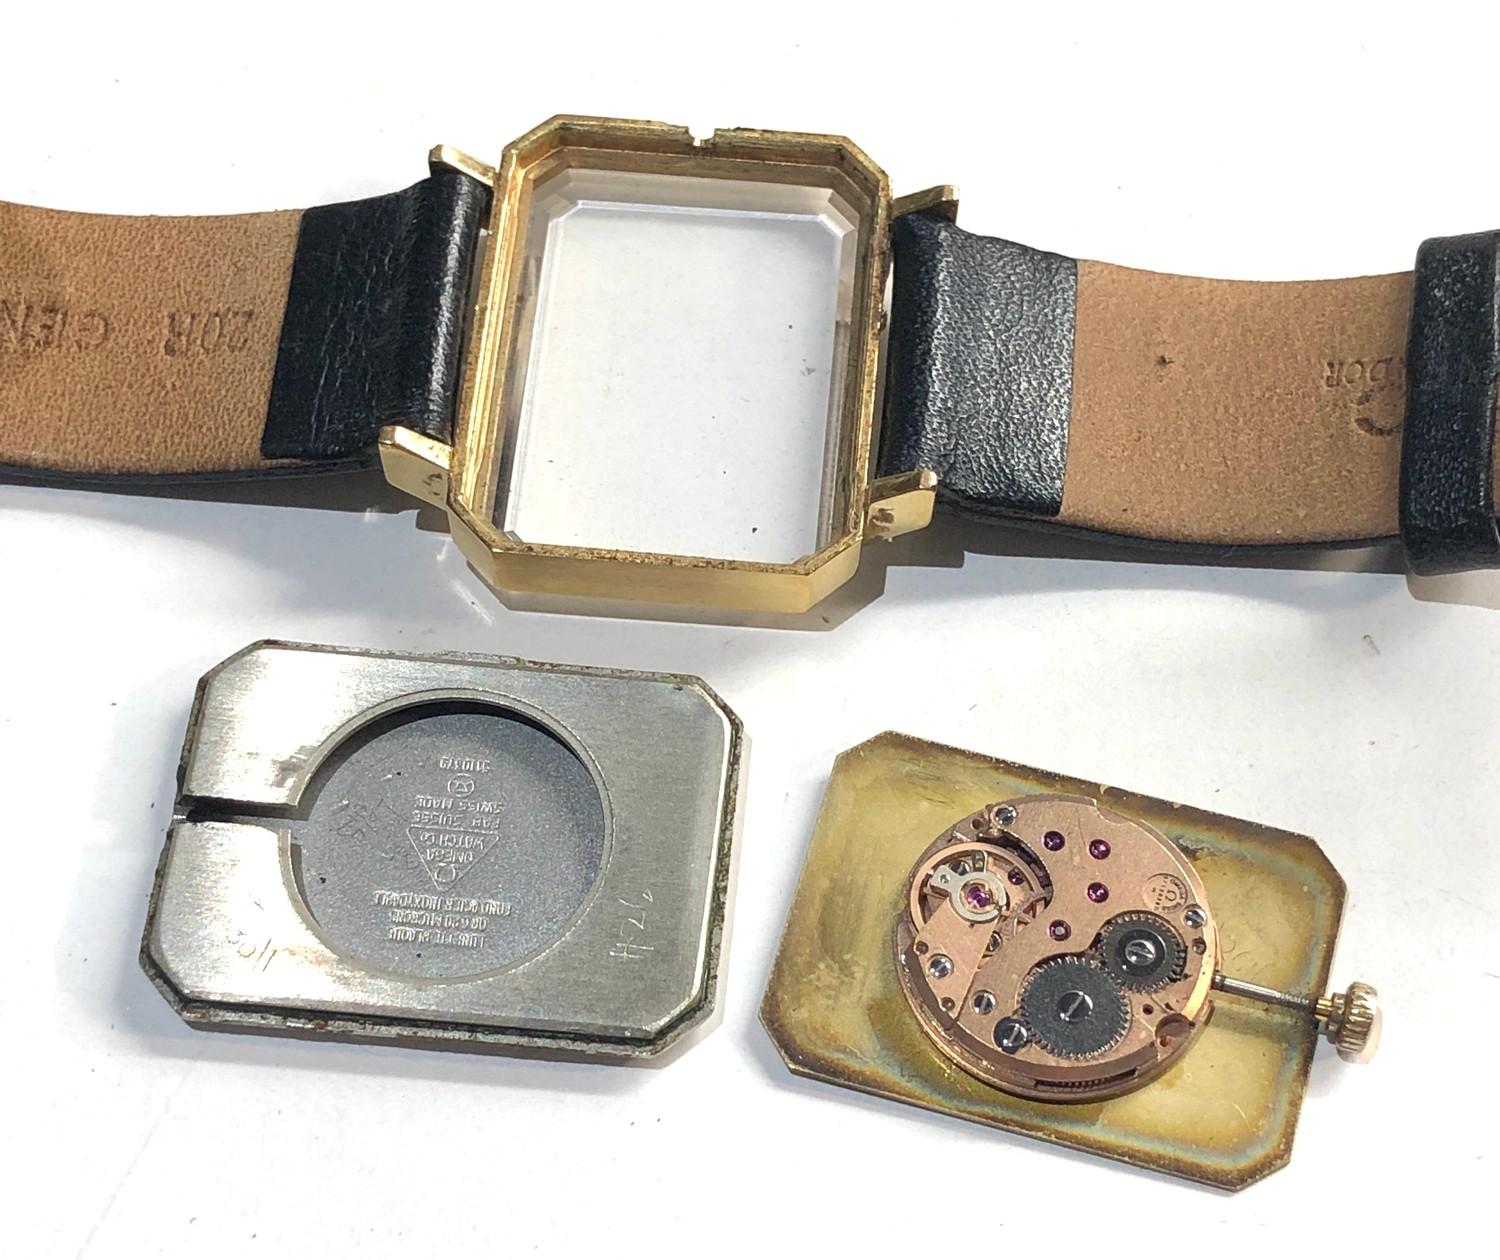 Vintage omega deville wristwatch winds and ticks but no warranty given - Bild 4 aus 4